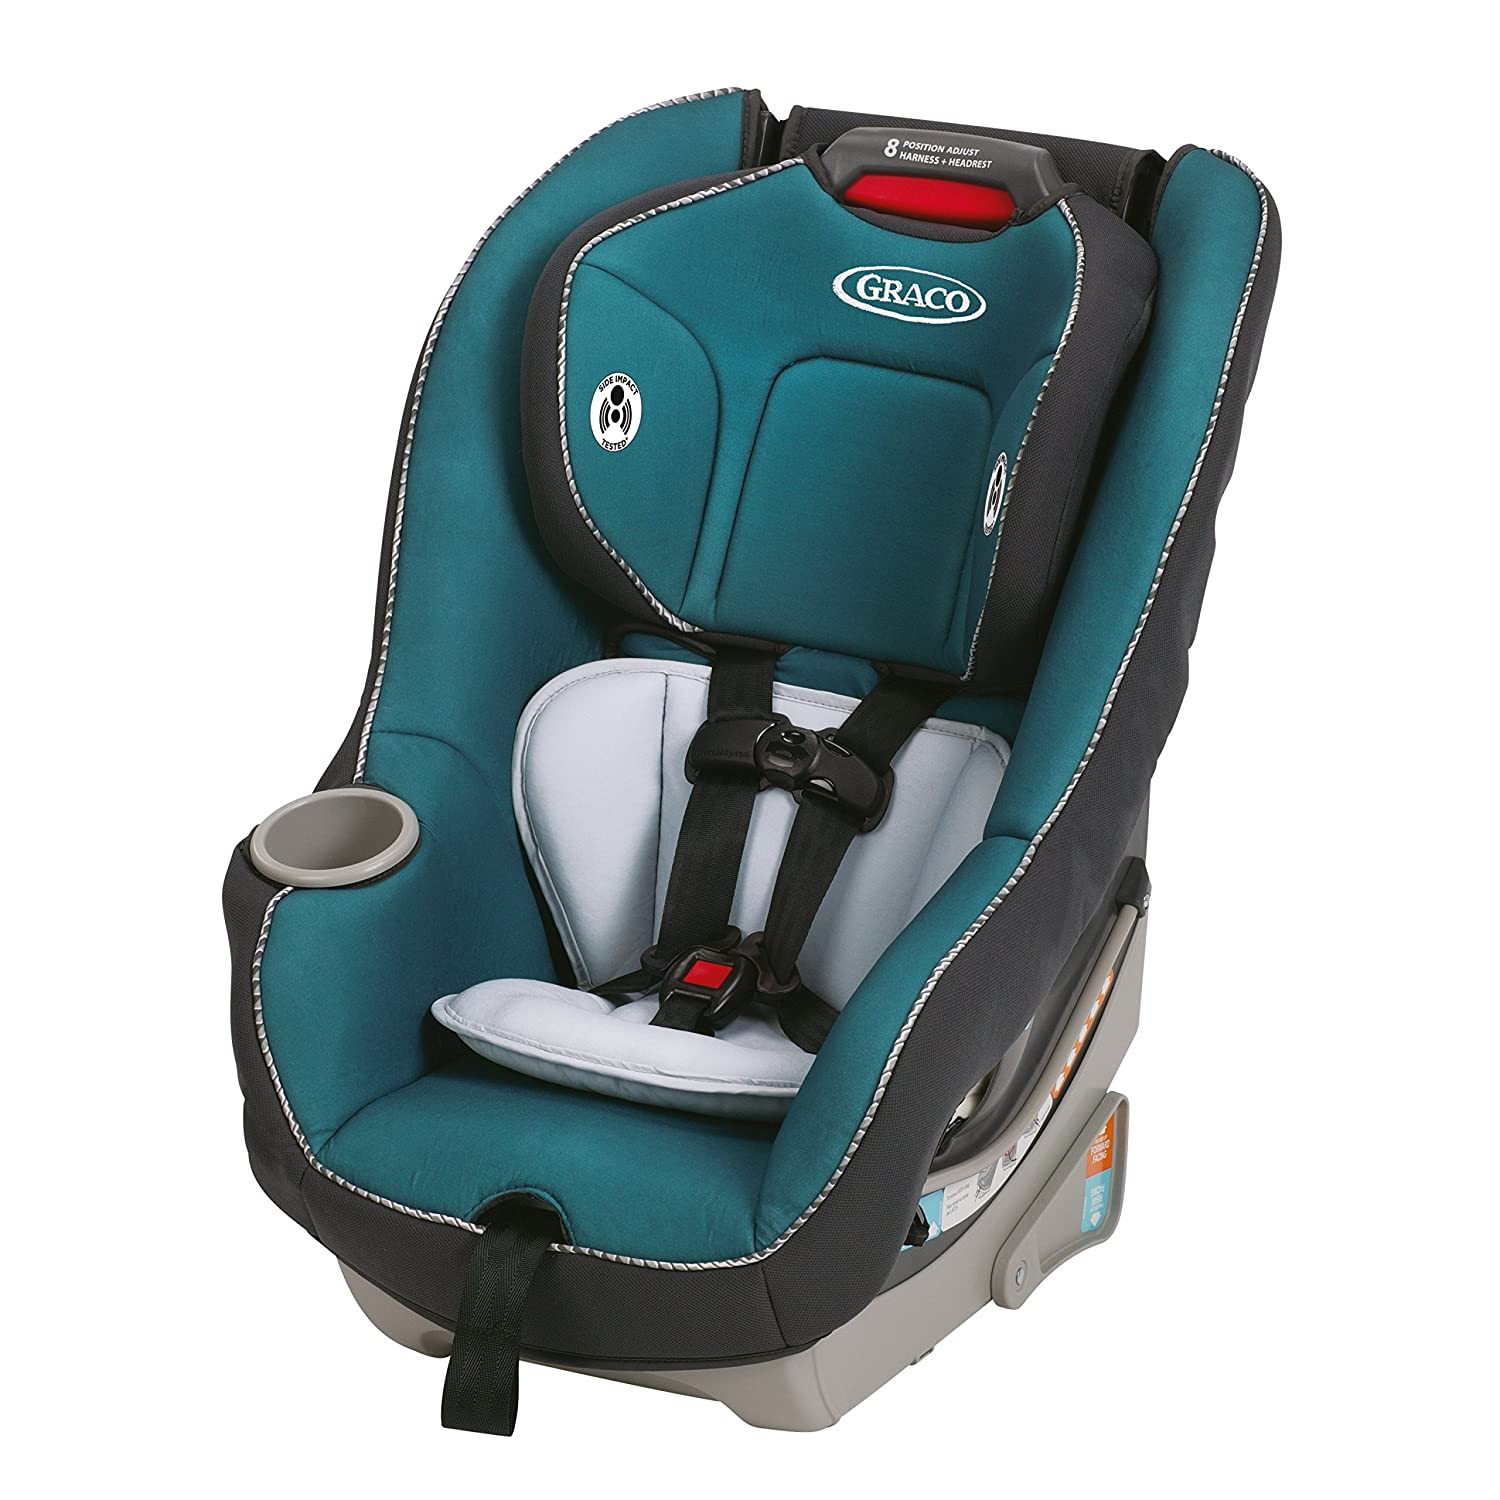 Top 4 Best Convertible Car Seat for Newborns Reviews in 2023 1